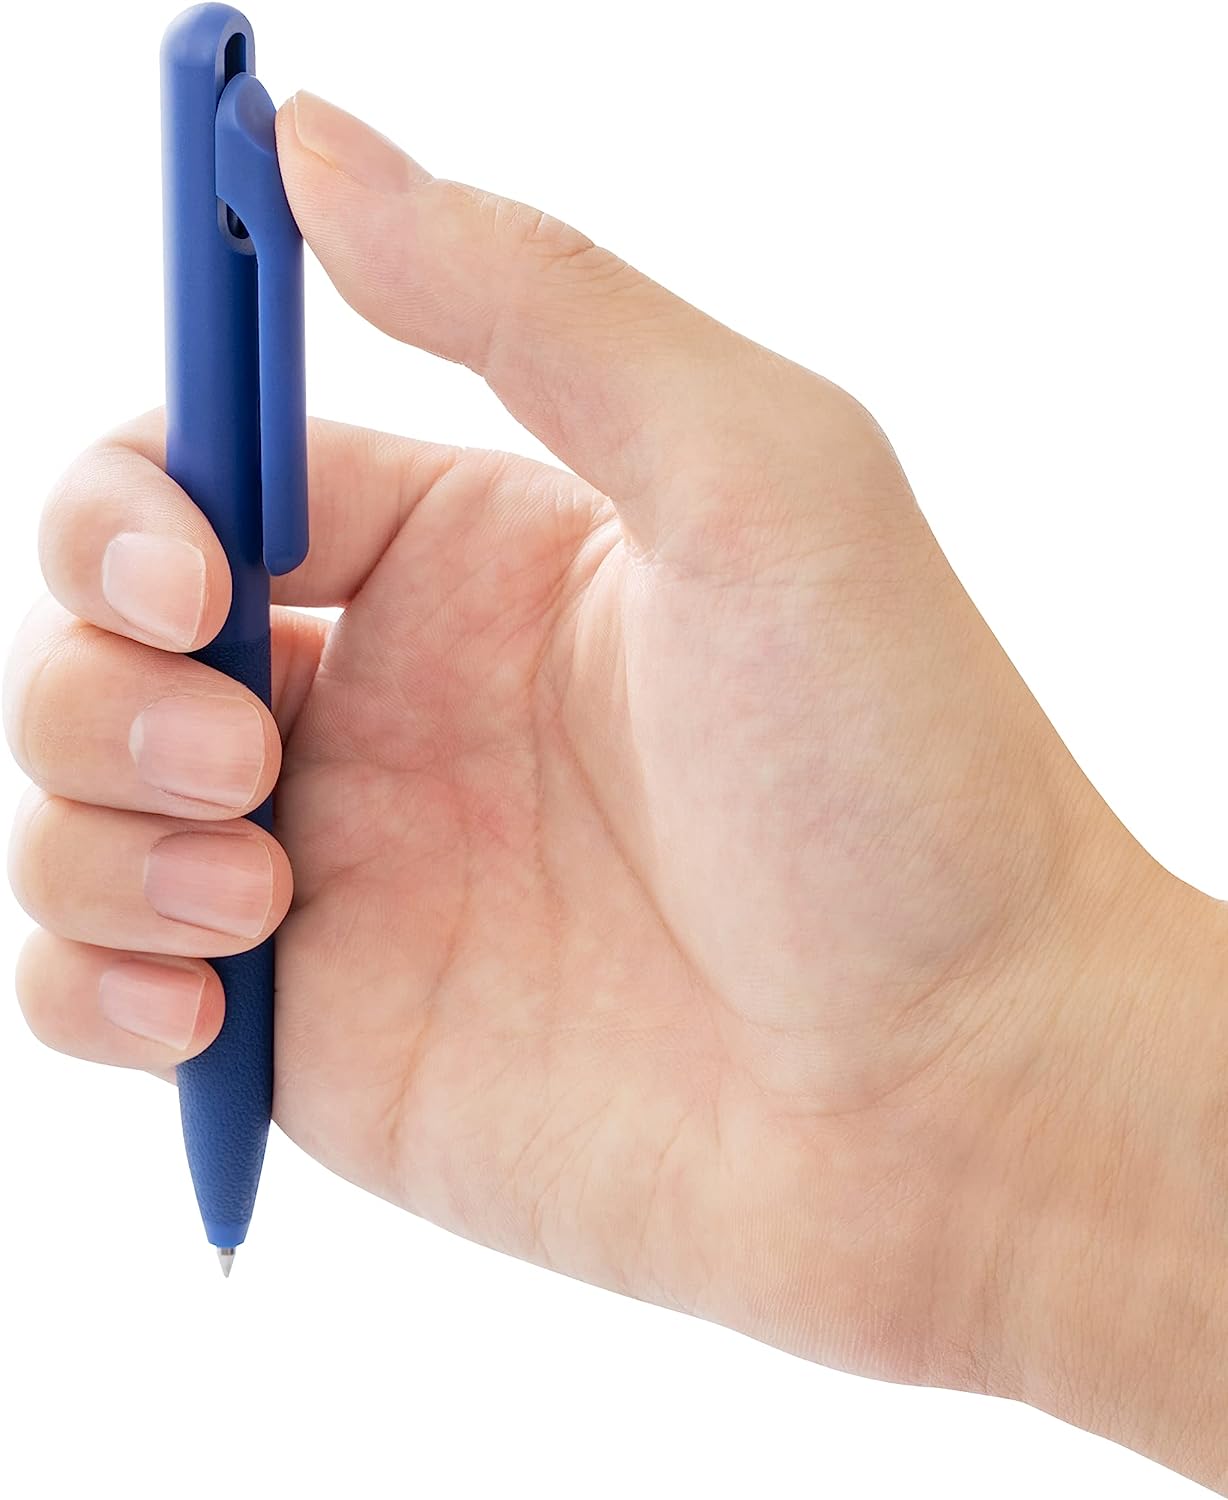 Pentel Calme 0.5mm Silent Ballpoint Pen